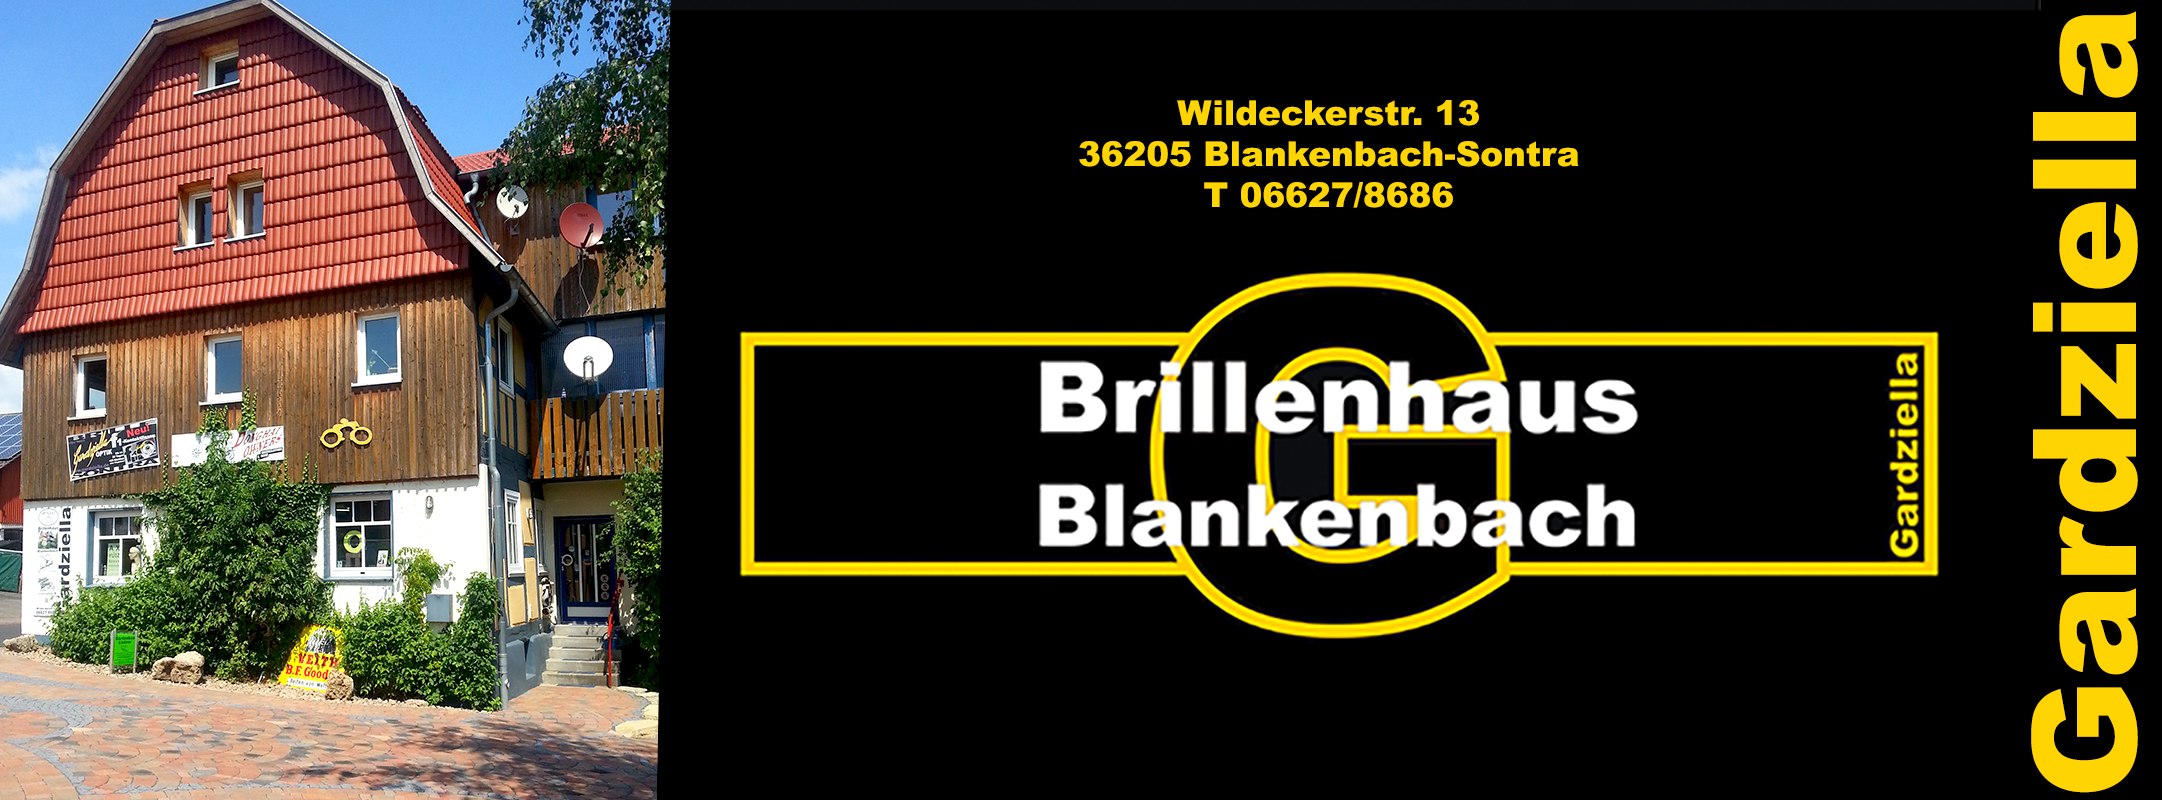 Give feedback - Feedback | Brillenhaus Blankenbach